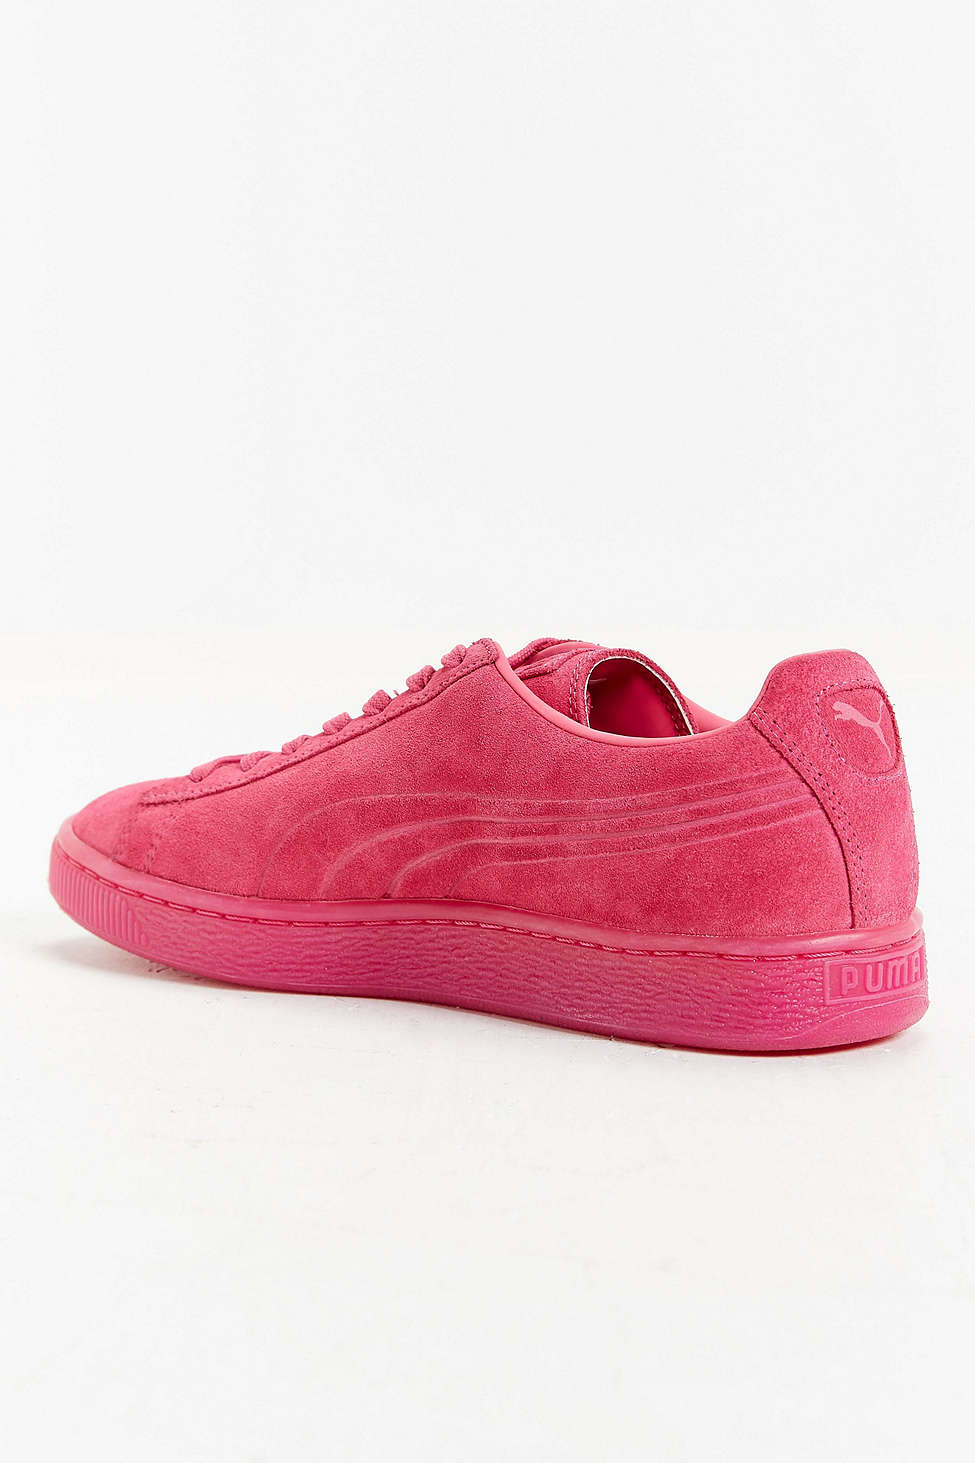 PUMA Suede Mono Sneaker in Pink - Lyst